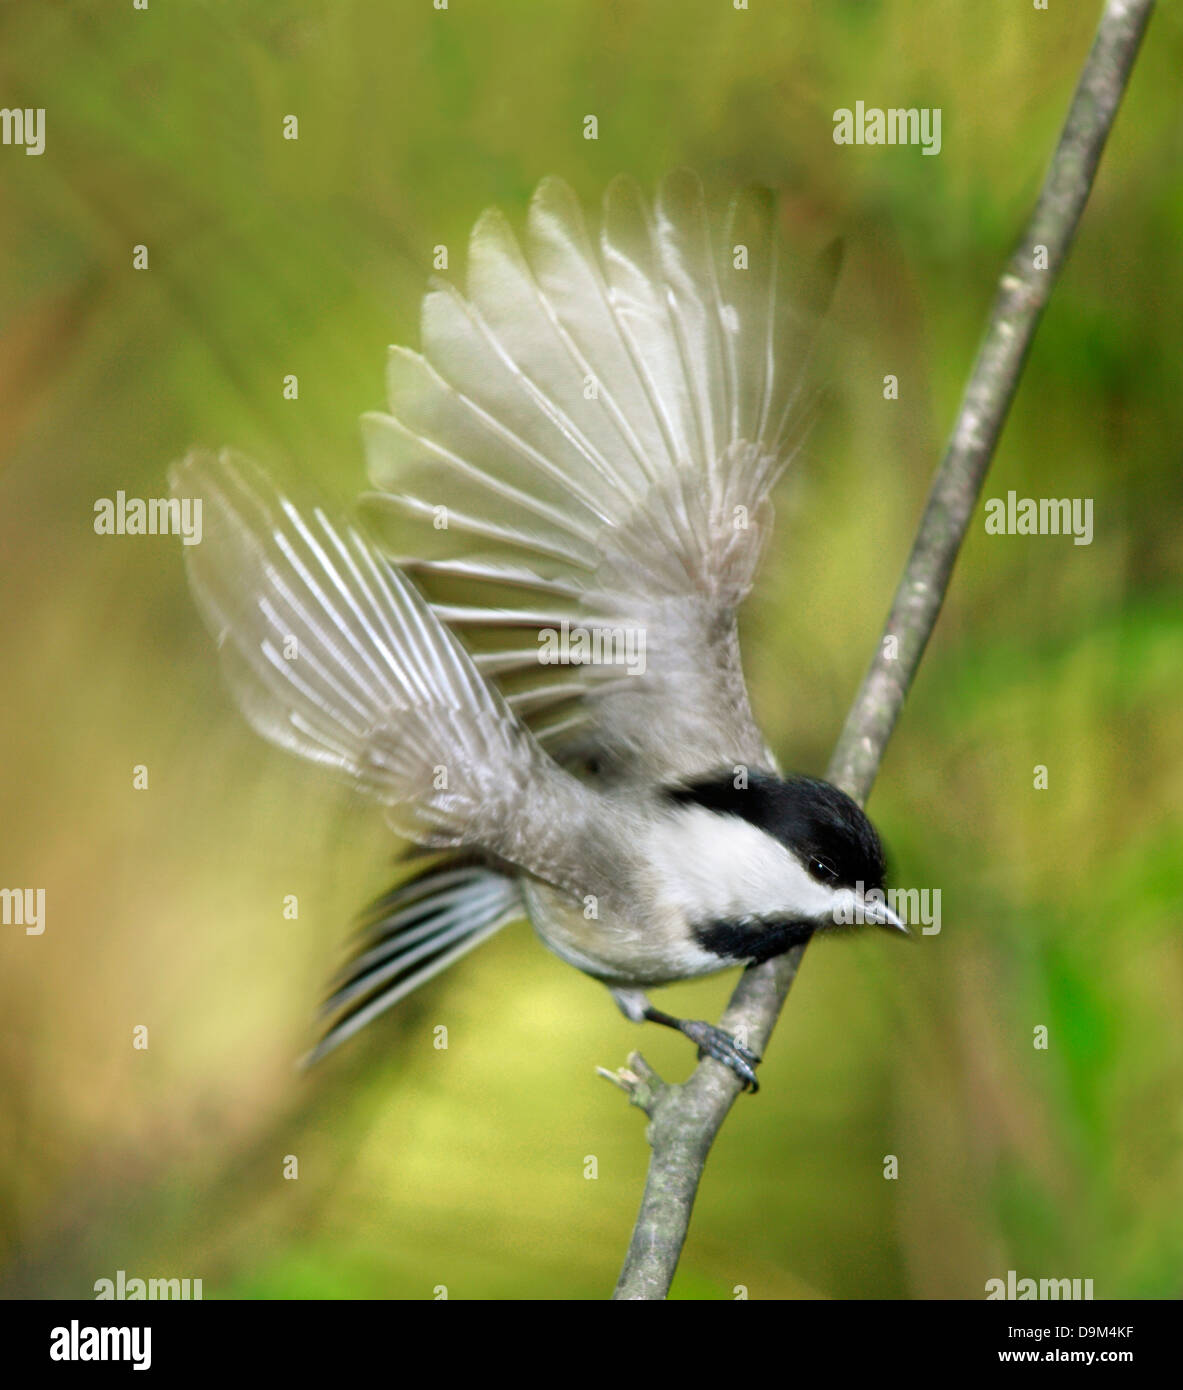 A Tiny Bird, The Carolina chickadee In Motion blur While Taking Flight, Poecile carolinensis Stock Photo